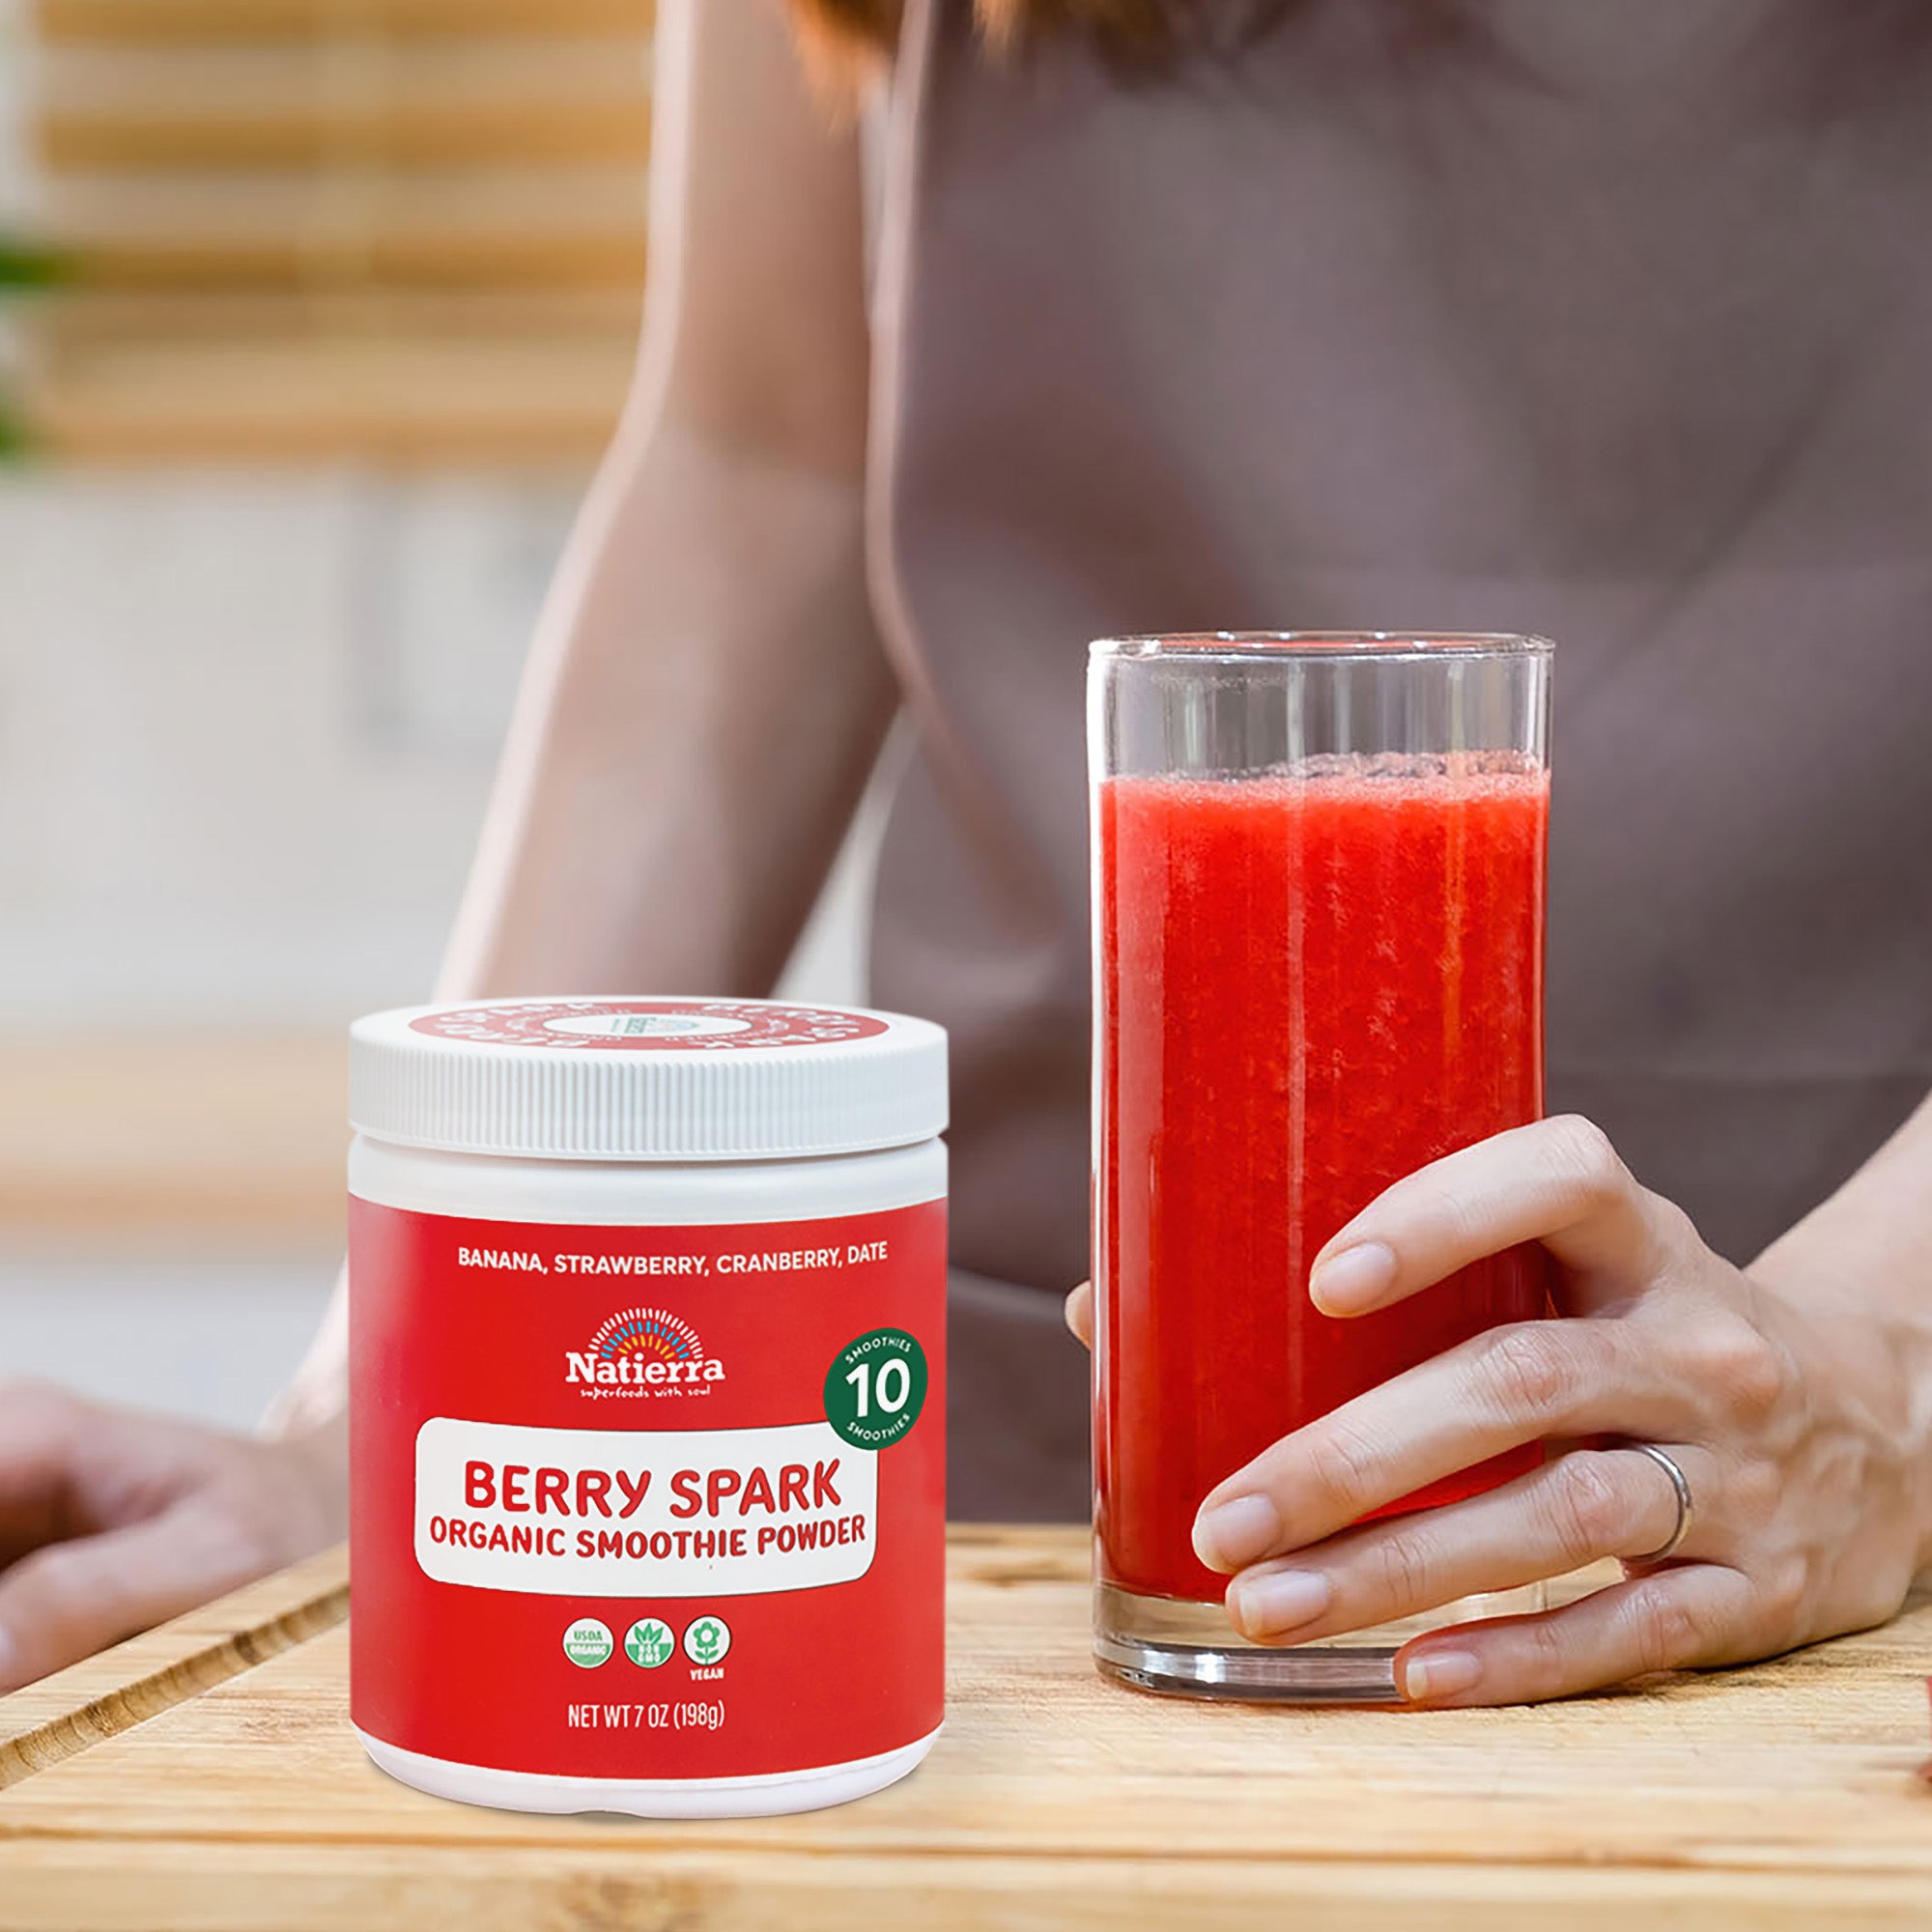 Berry Spark organic smoothie